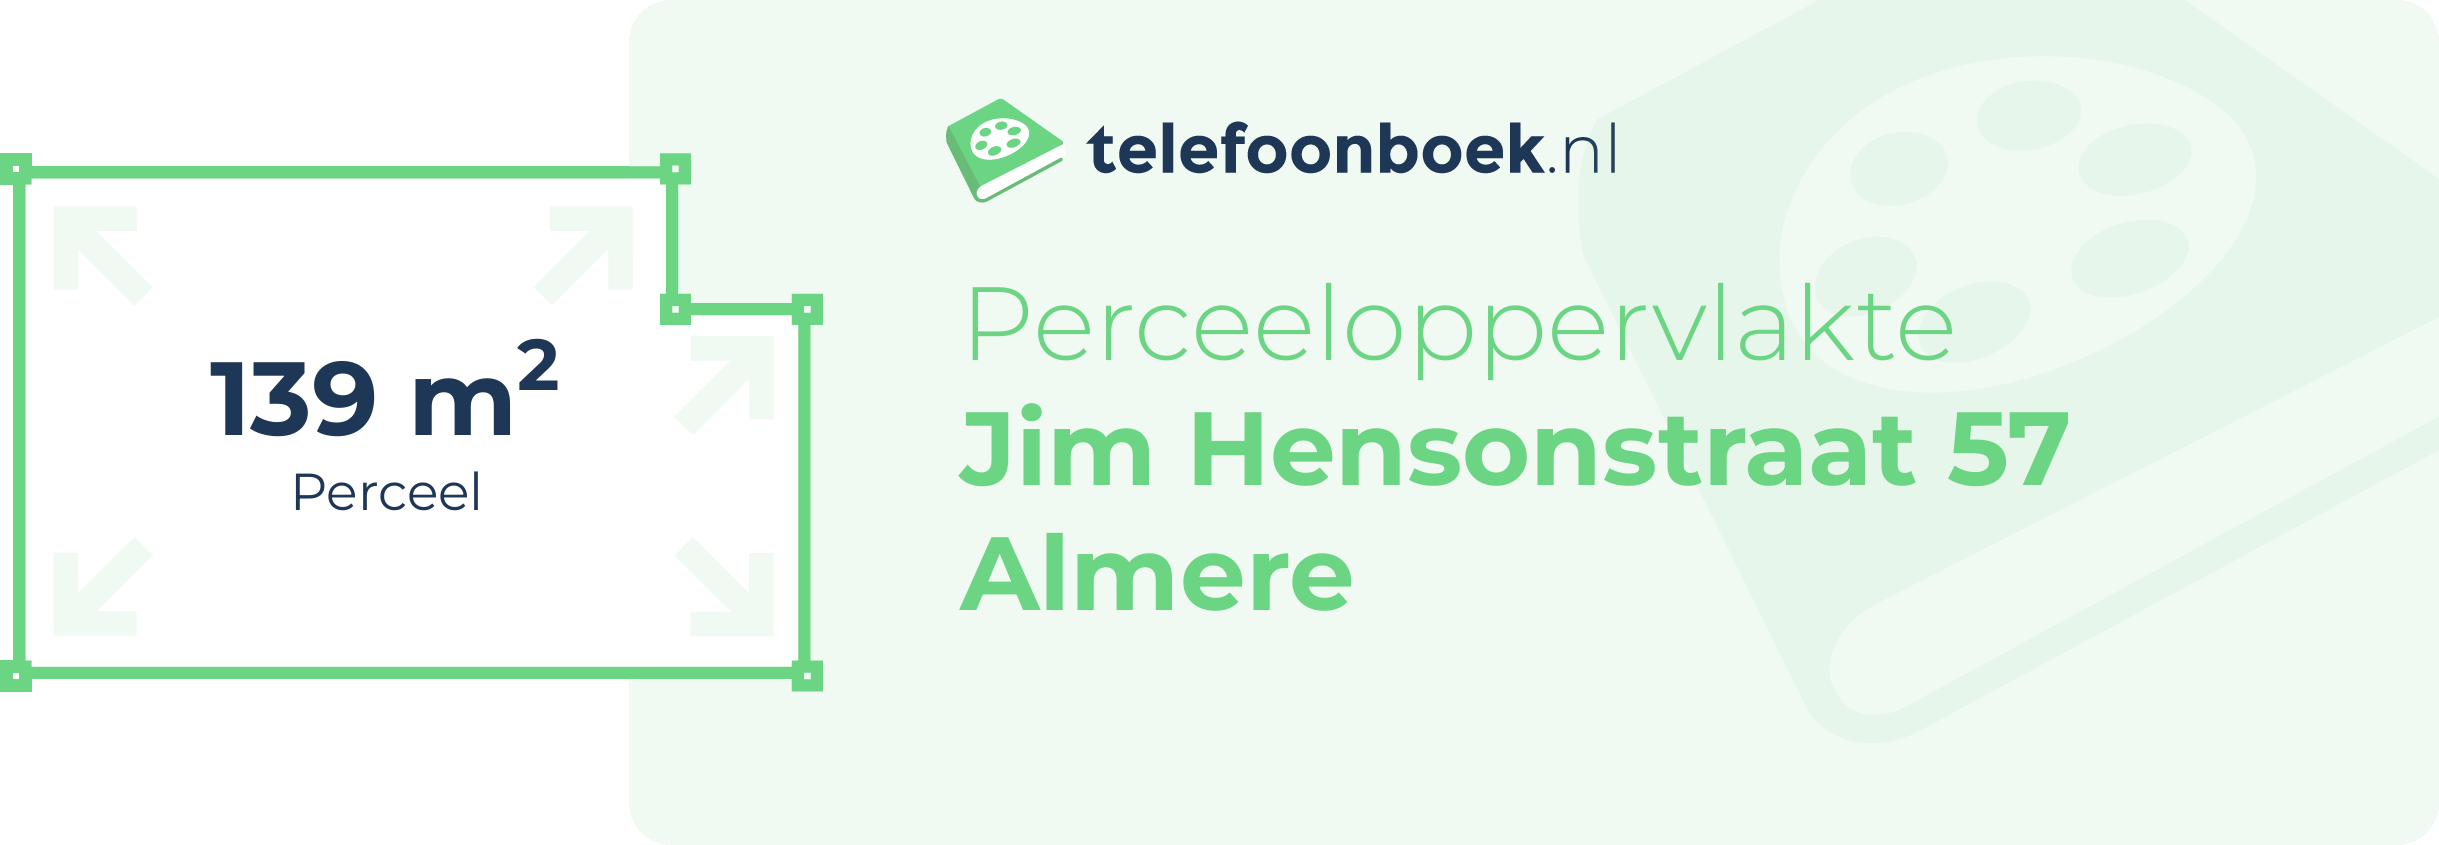 Perceeloppervlakte Jim Hensonstraat 57 Almere